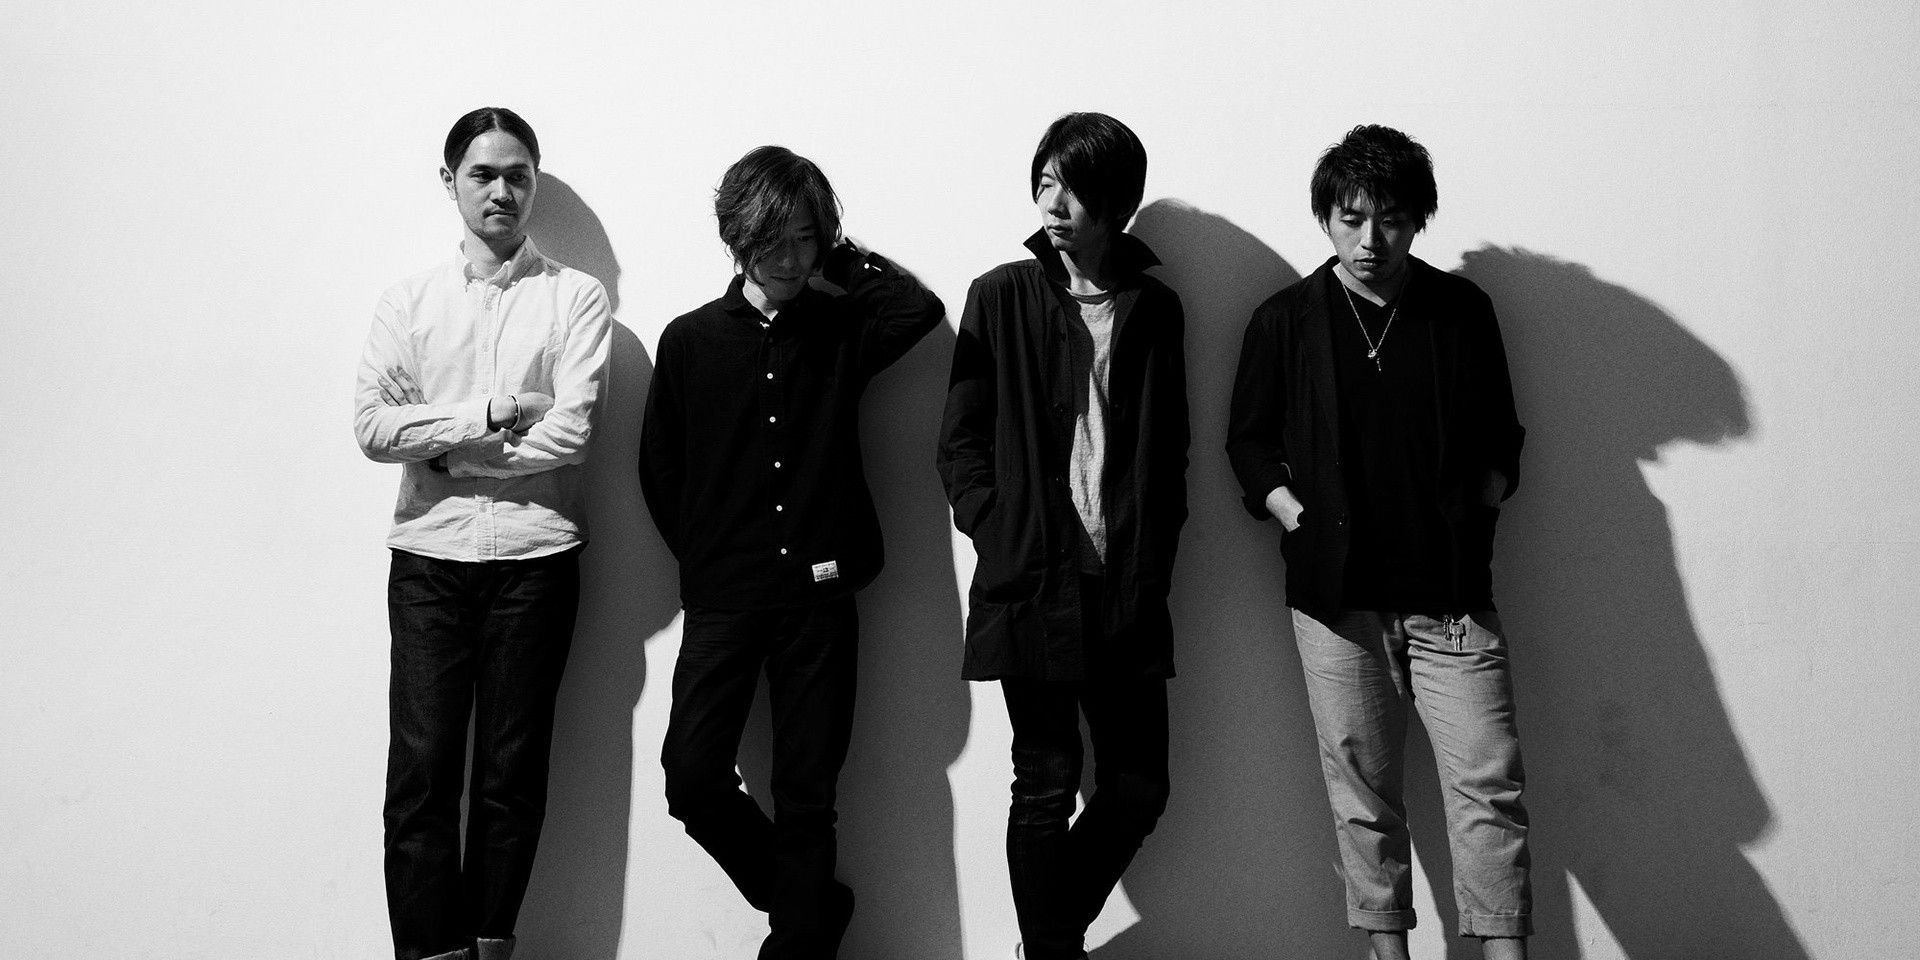 Japanese instrumental rock quartet LITE to make their Manila debut in headlining concert with Terno Recordings